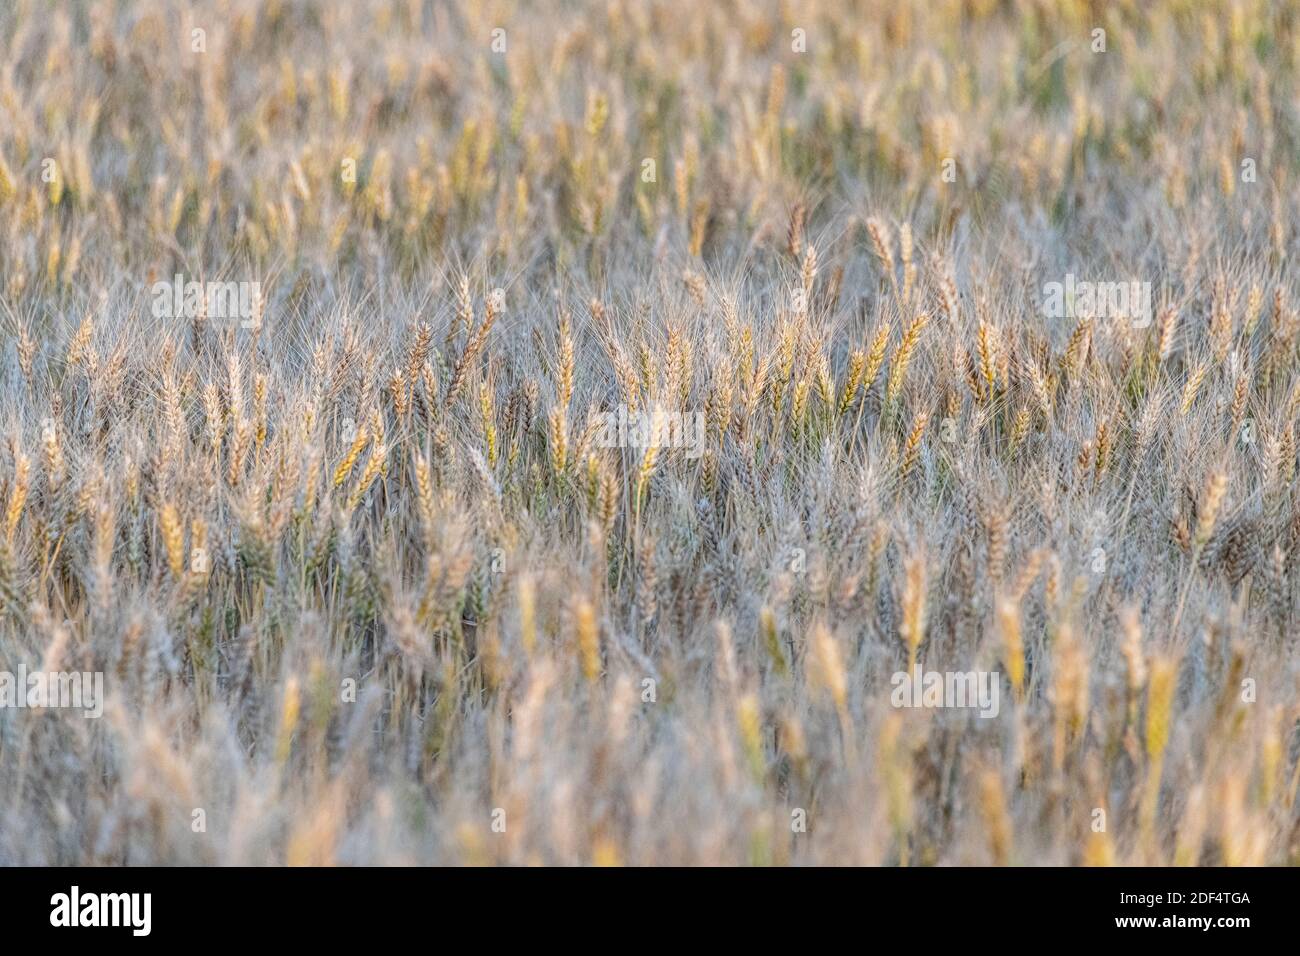 Wheat ready for harvest in Western Australia's wheat belt. Stock Photo